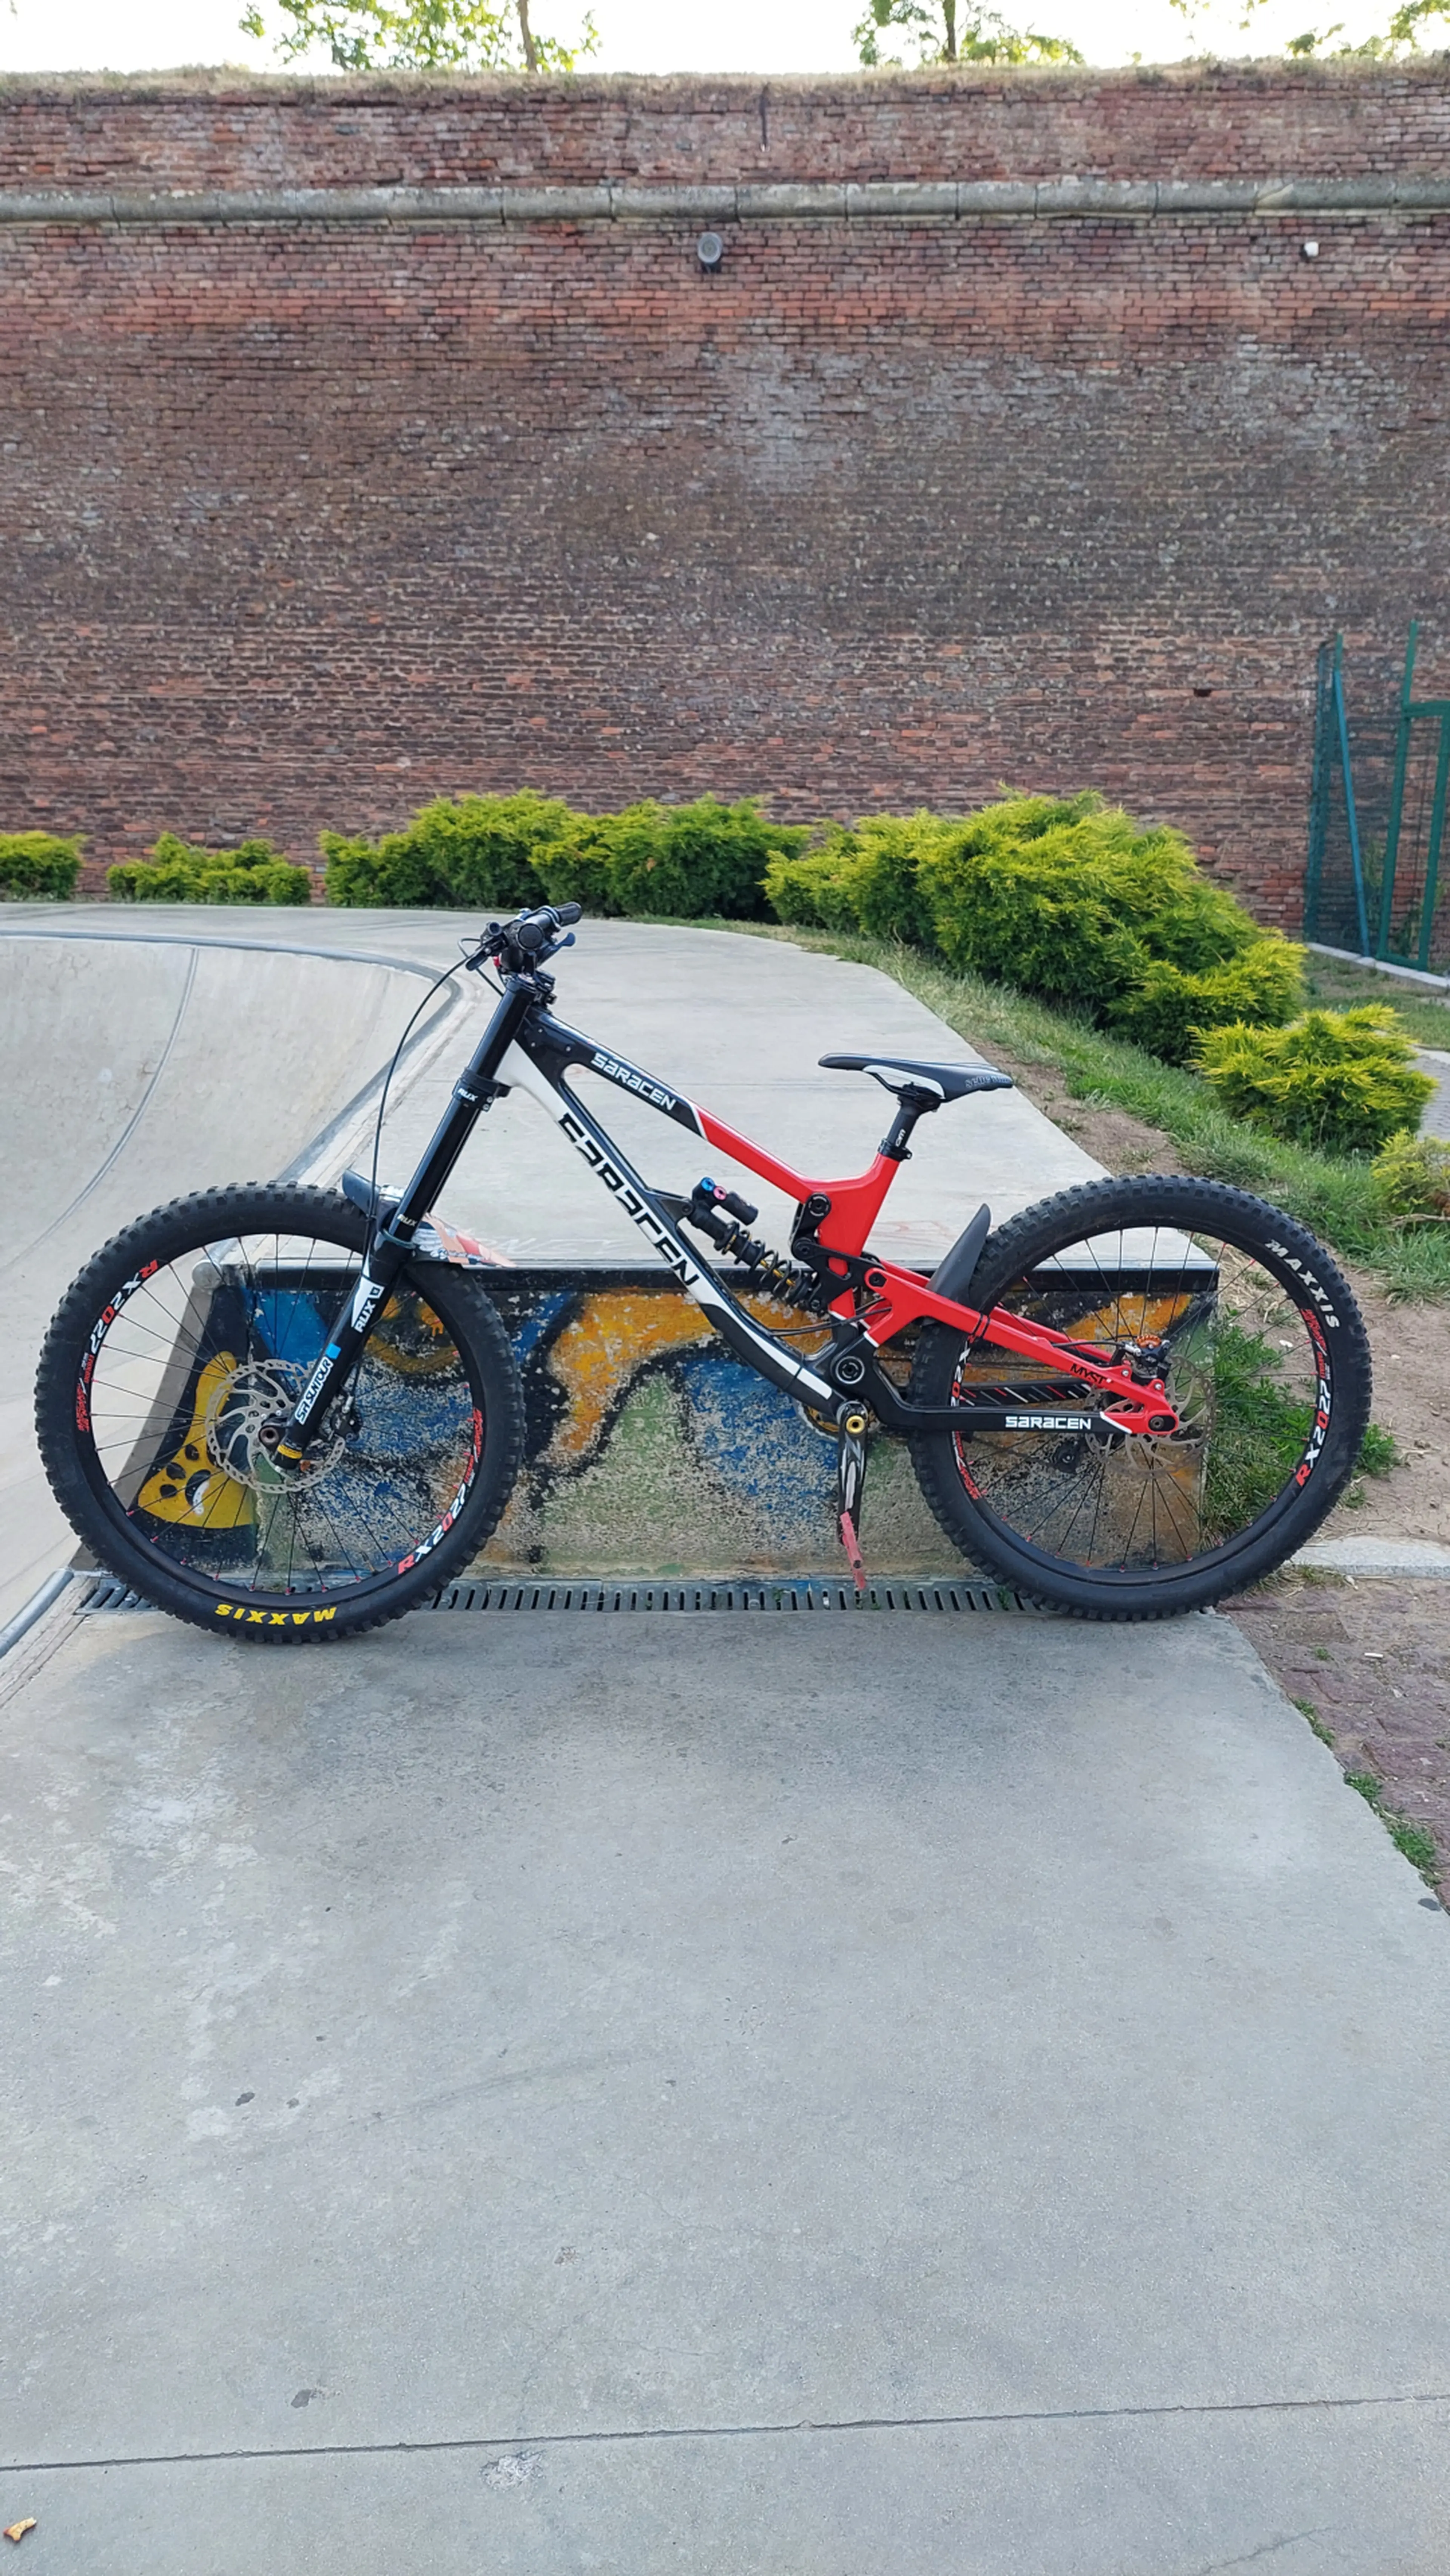 2. Bicicleta downhill Saracen myst cx 2019